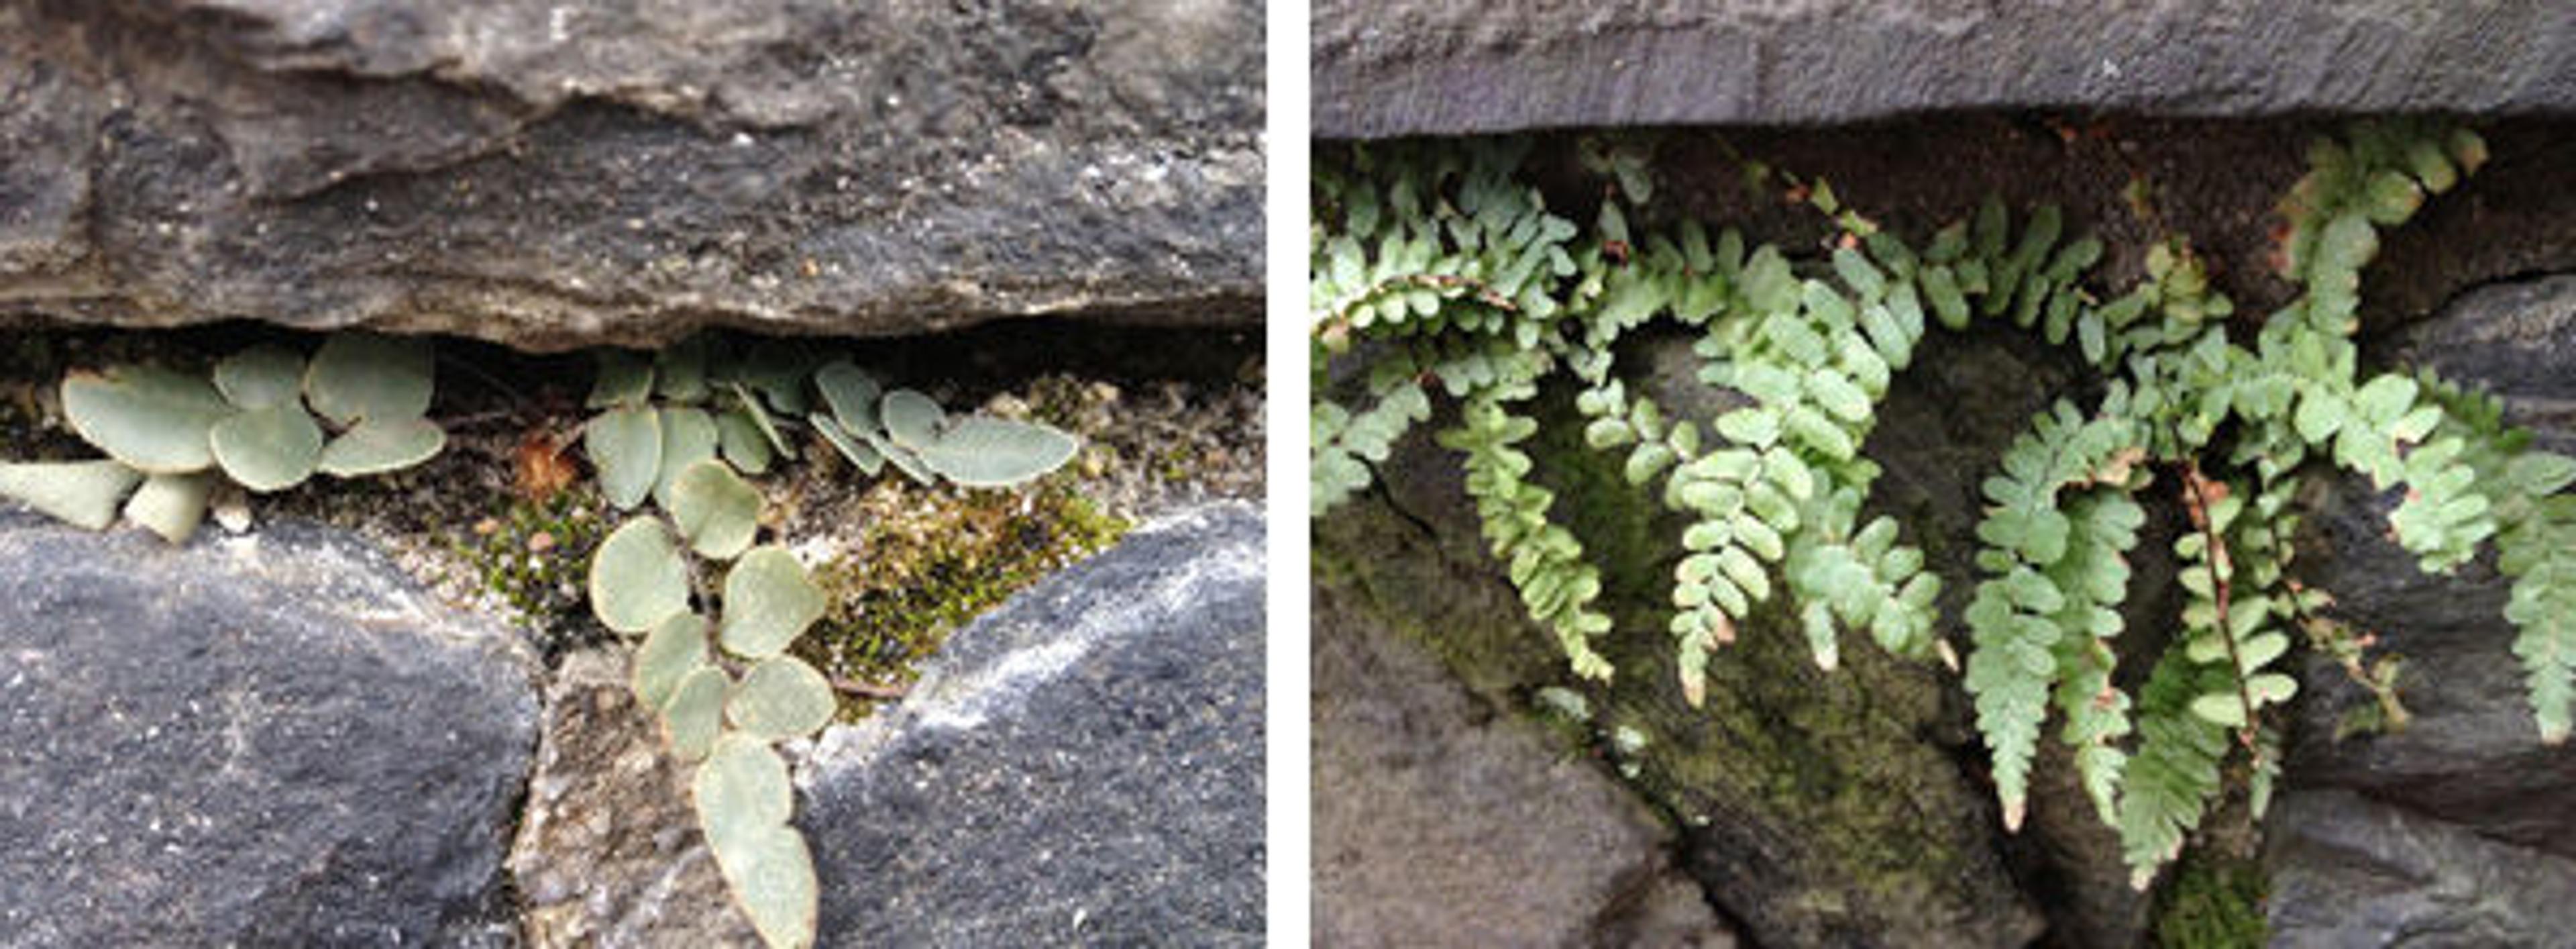 Cliff brake (Pelleae sp.) and ebony spleenwort (Asplenium platyneuron) growing in The Cloisters' walls along the upper drive.